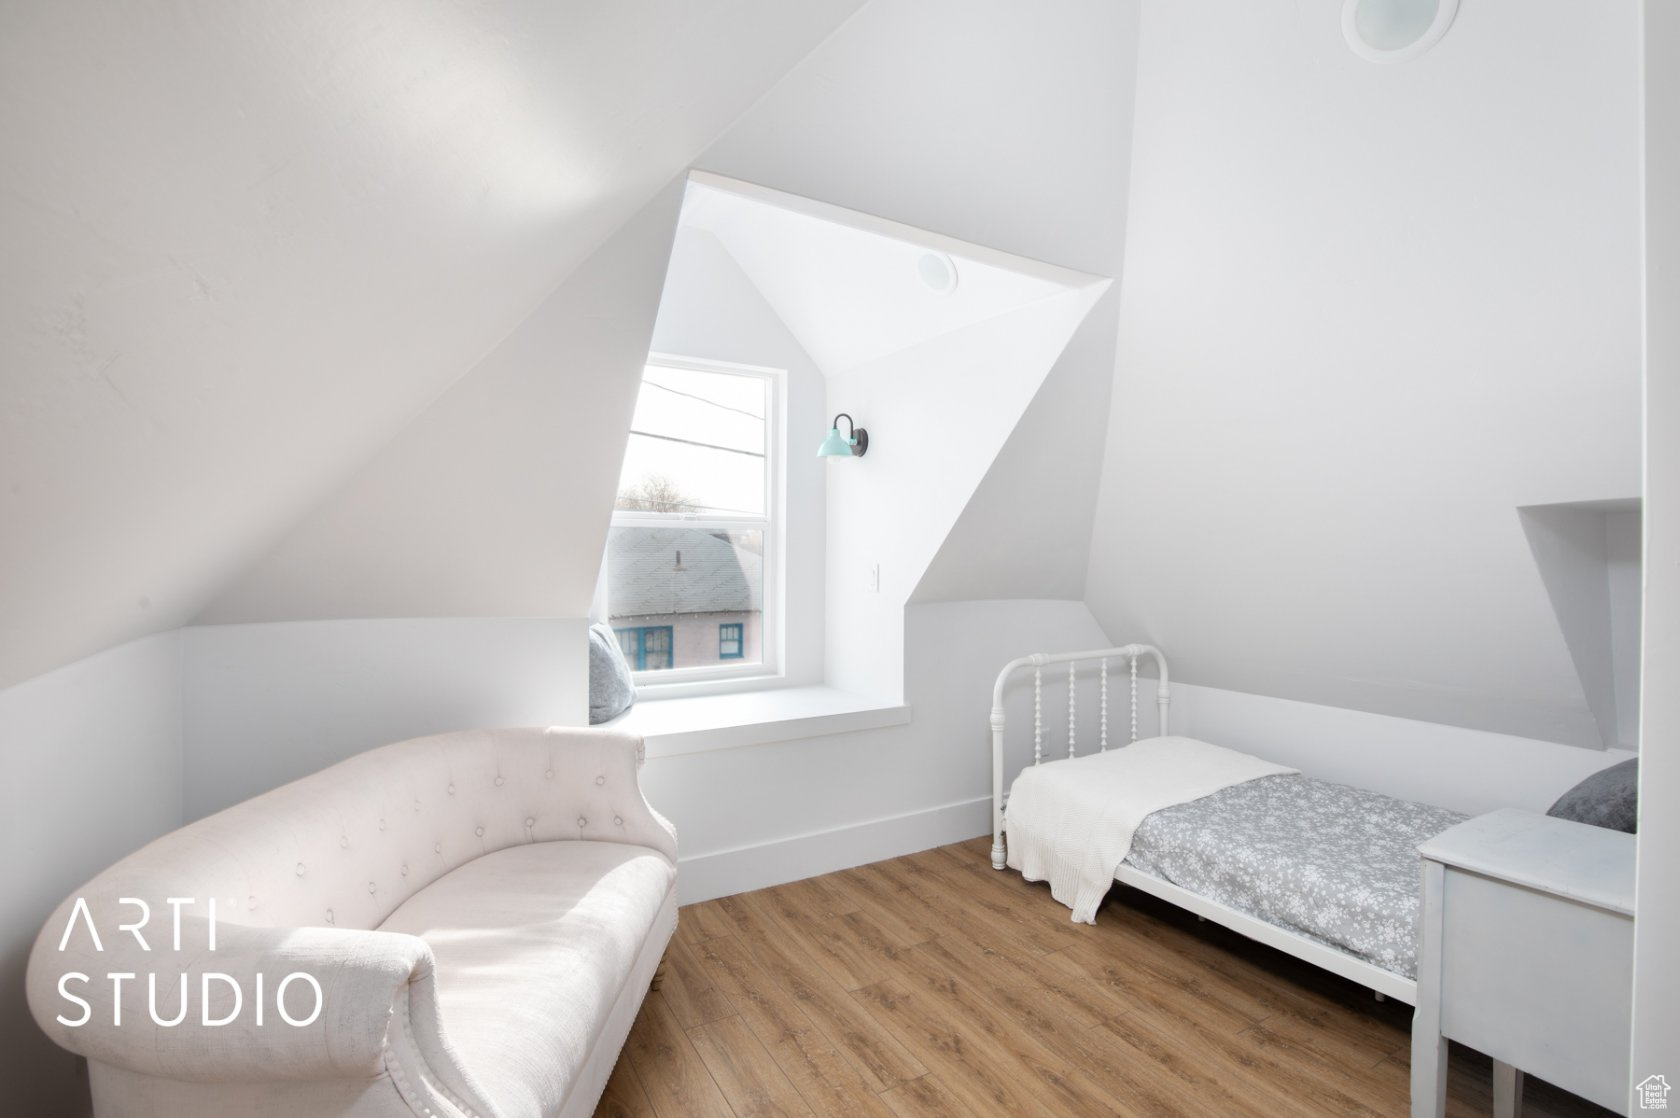 Bedroom featuring light hardwood / wood-style flooring and lofted ceiling